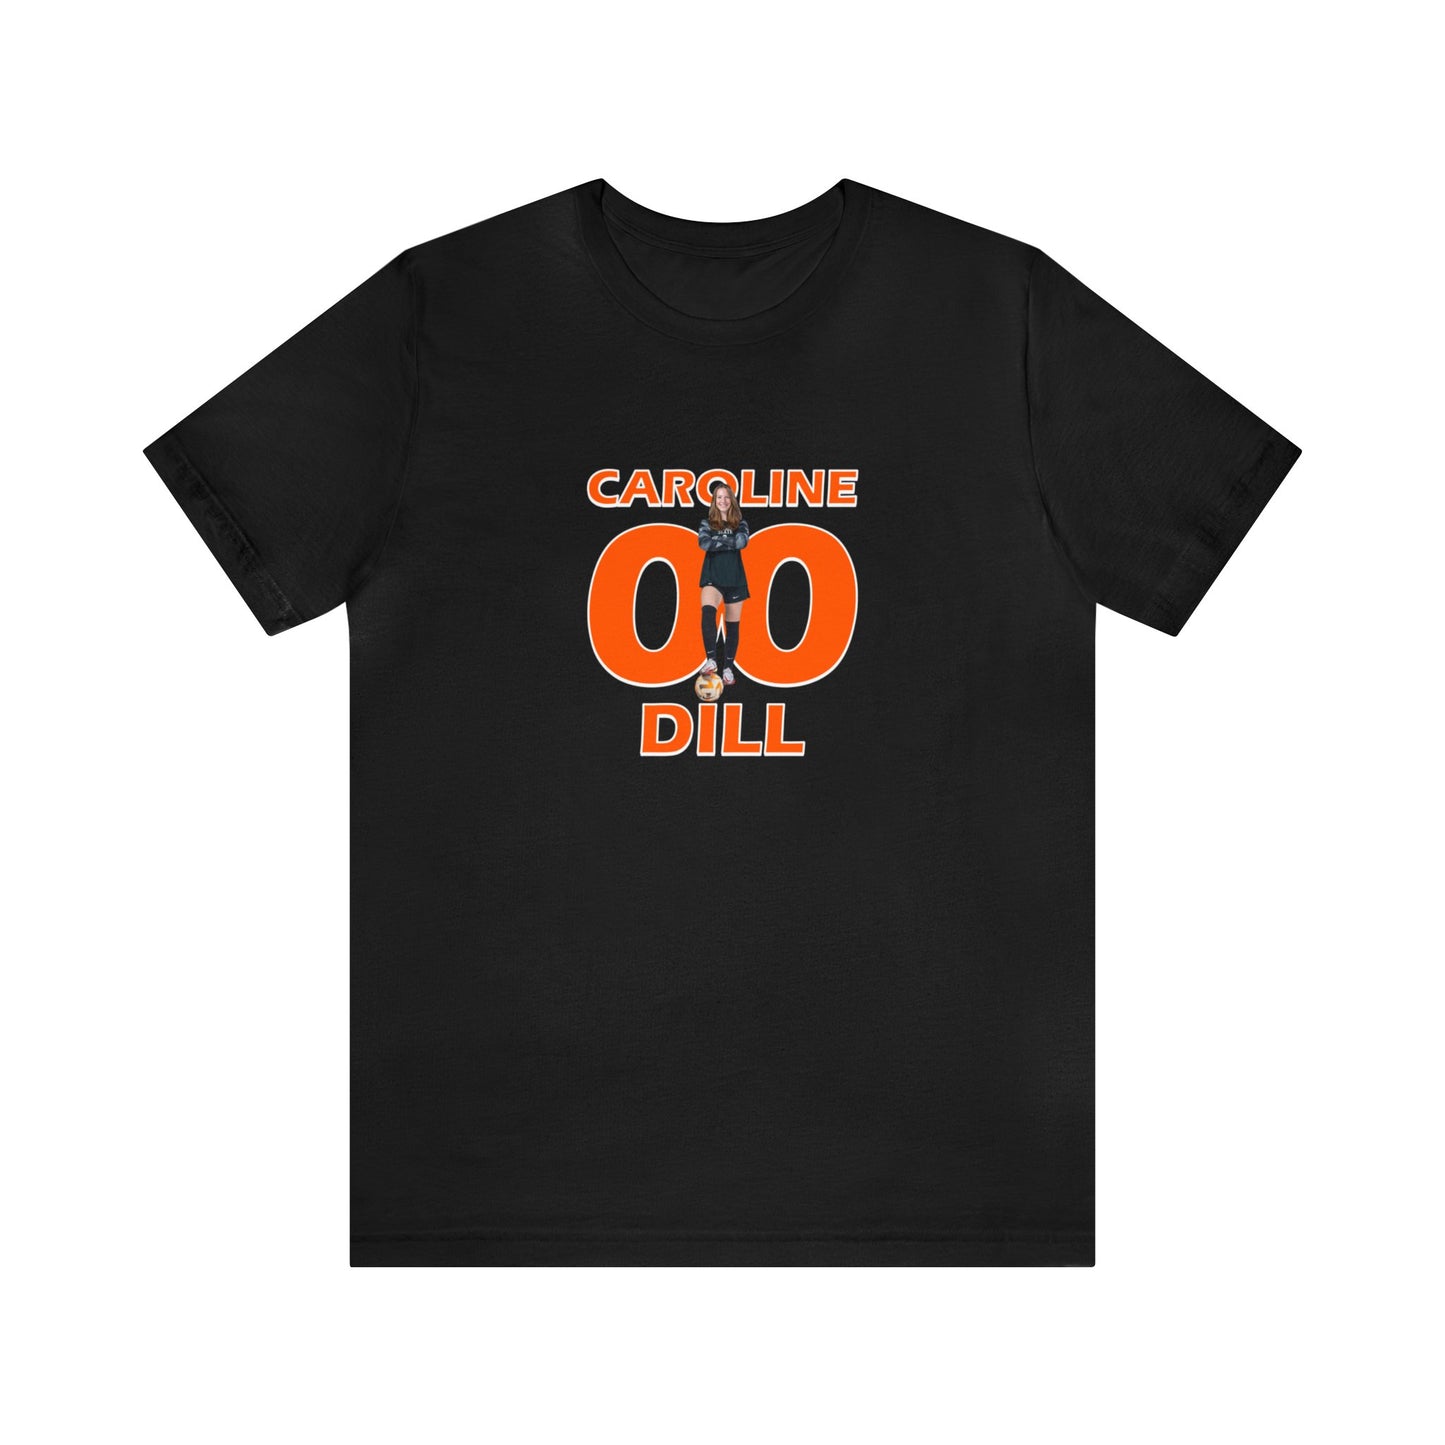 Caroline Dill T-Shirt